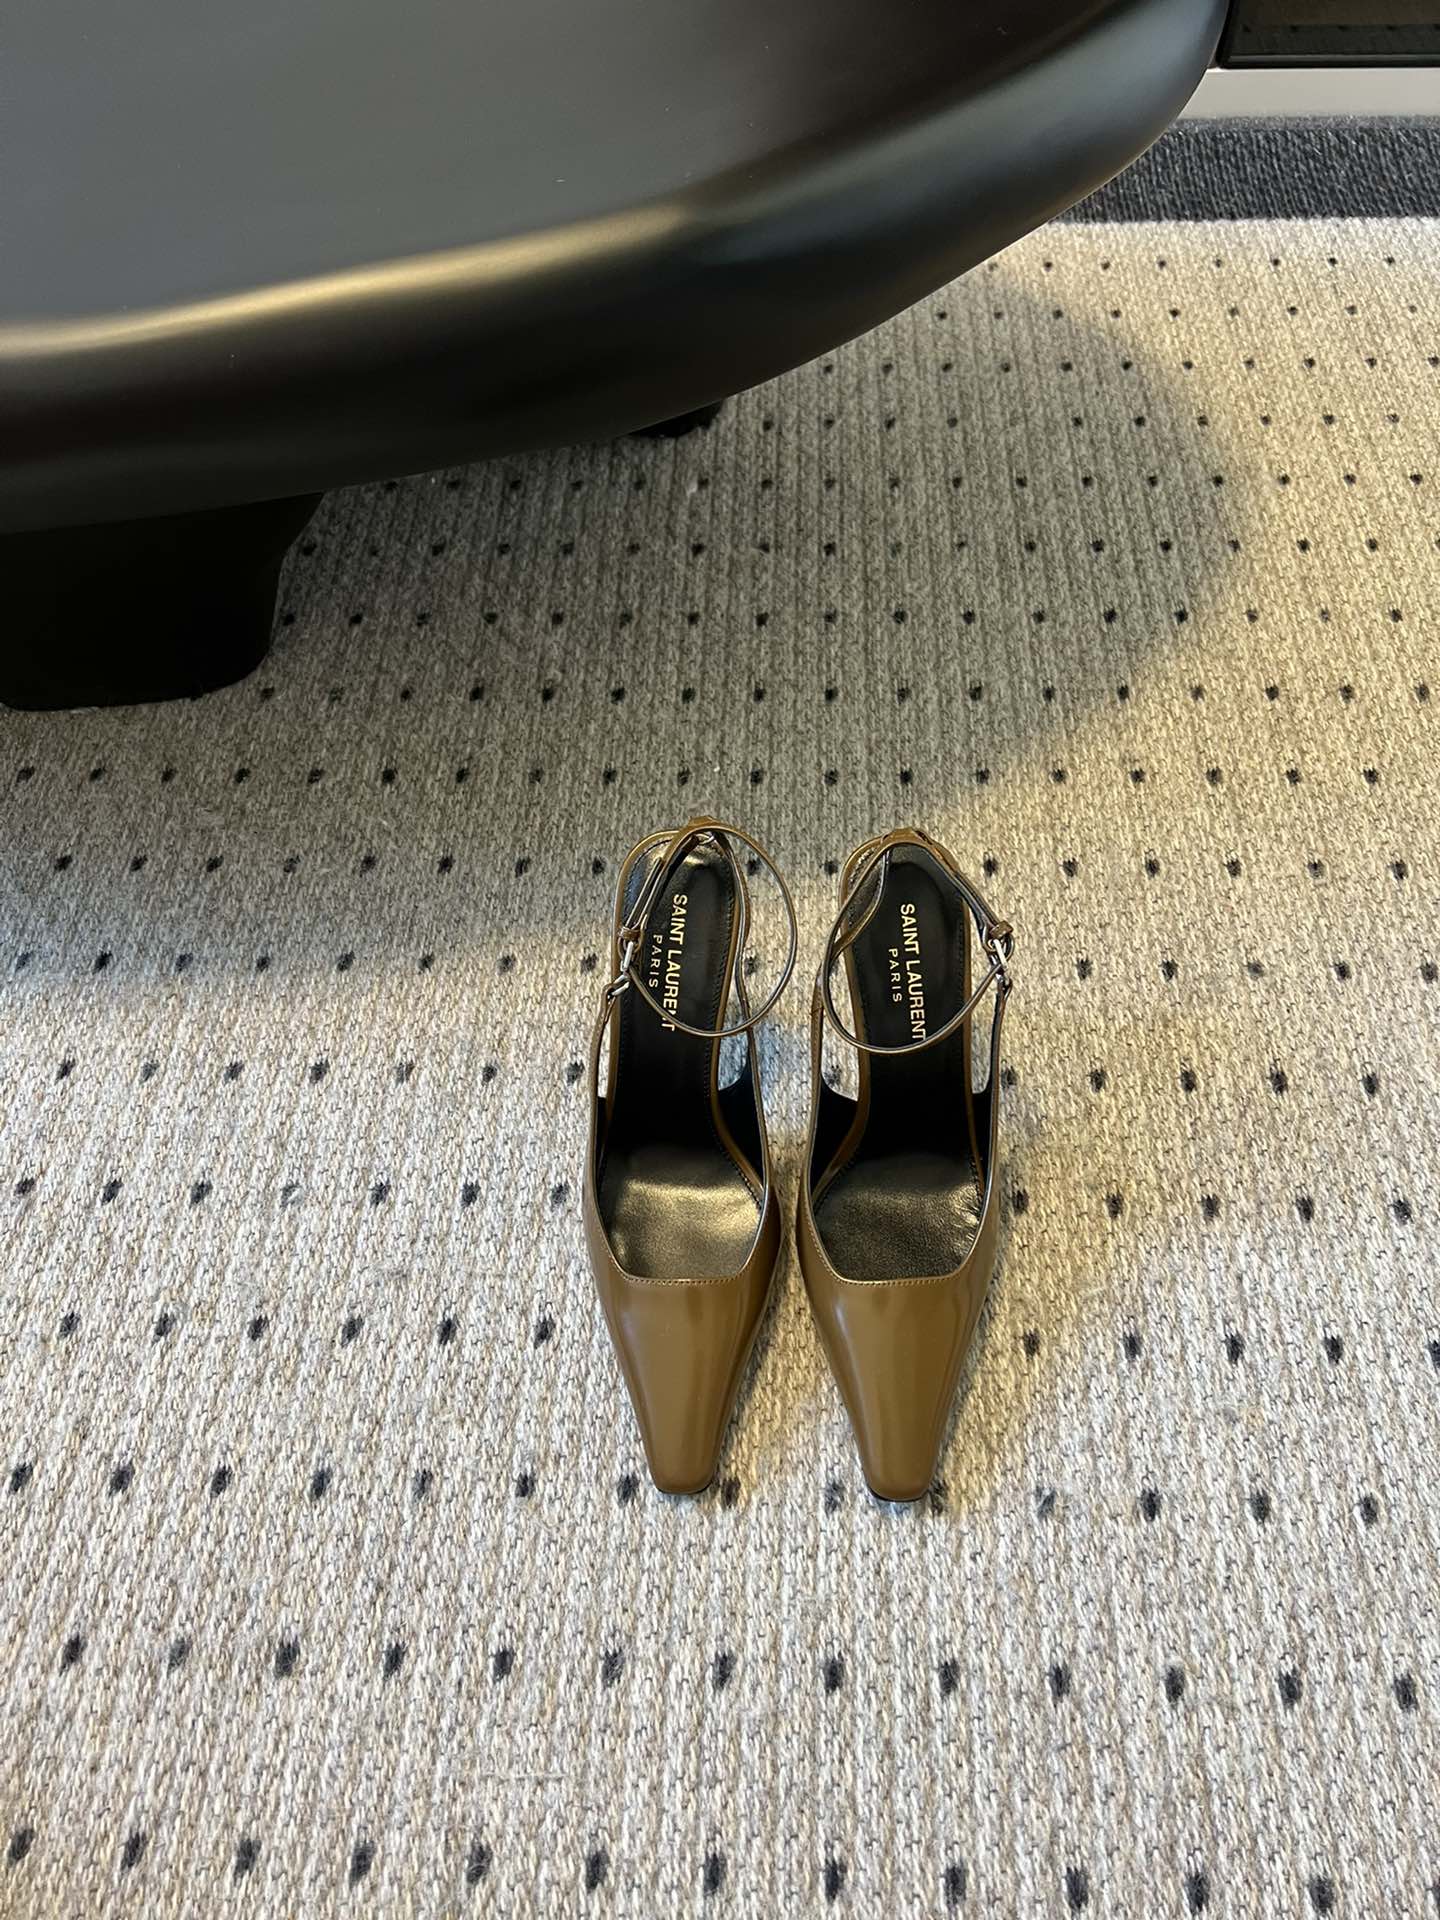 Yves Saint Laurent Shoes High Heel Pumps Genuine Leather Patent